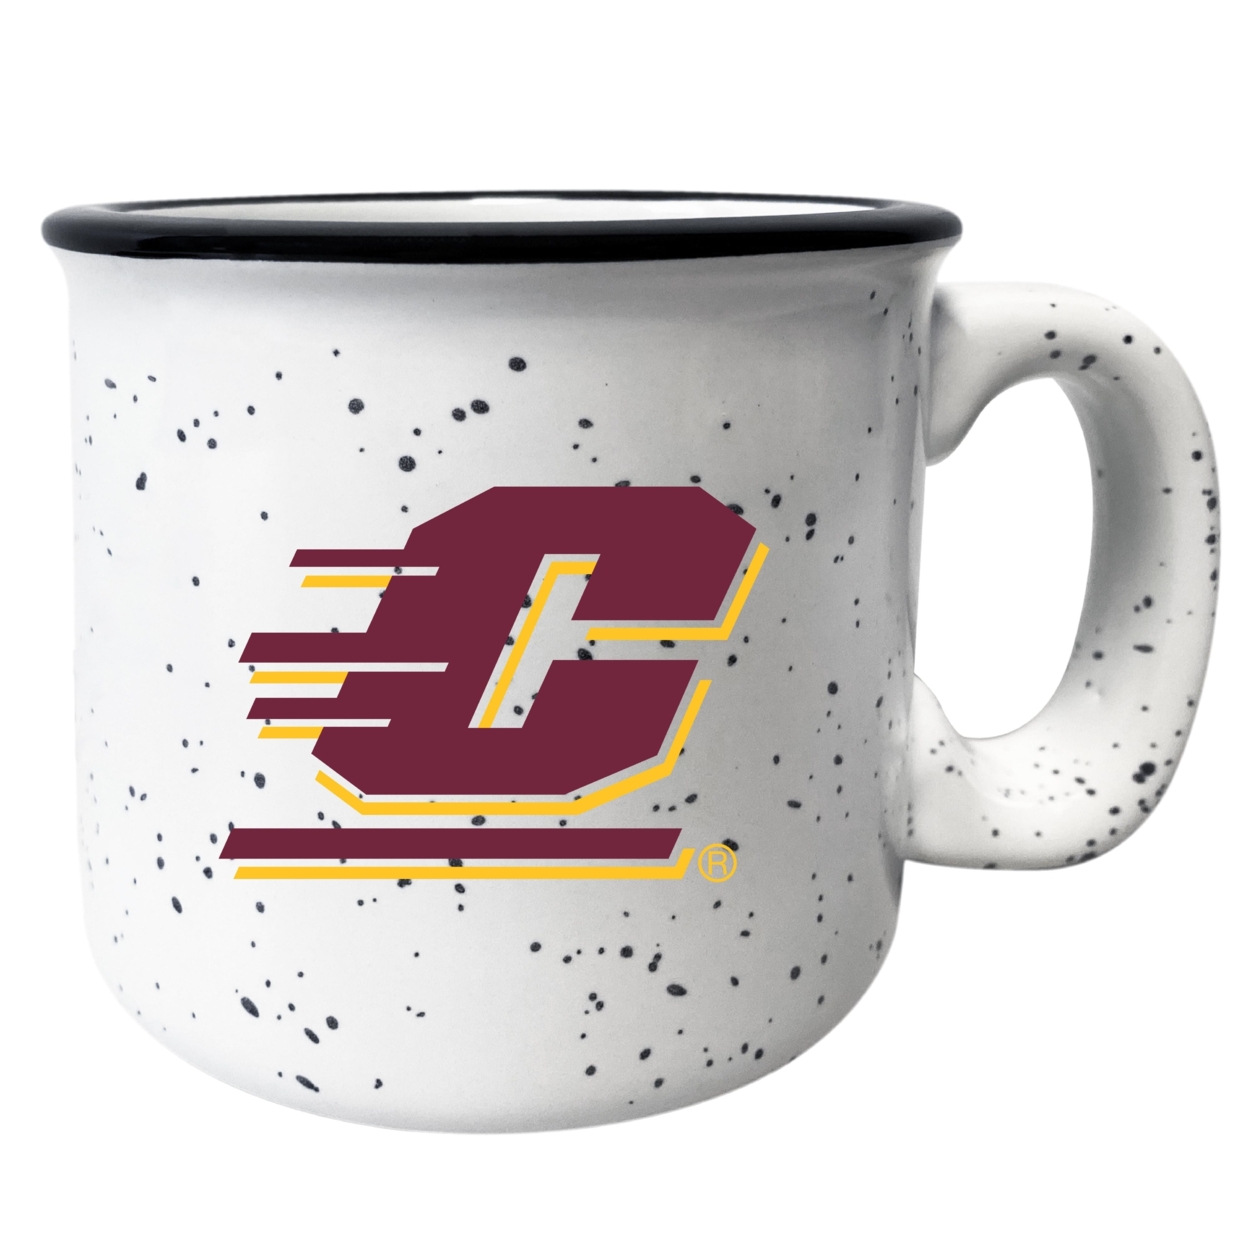 Central Michigan University Speckled Ceramic Camper Coffee Mug - Choose Your Color - Gray